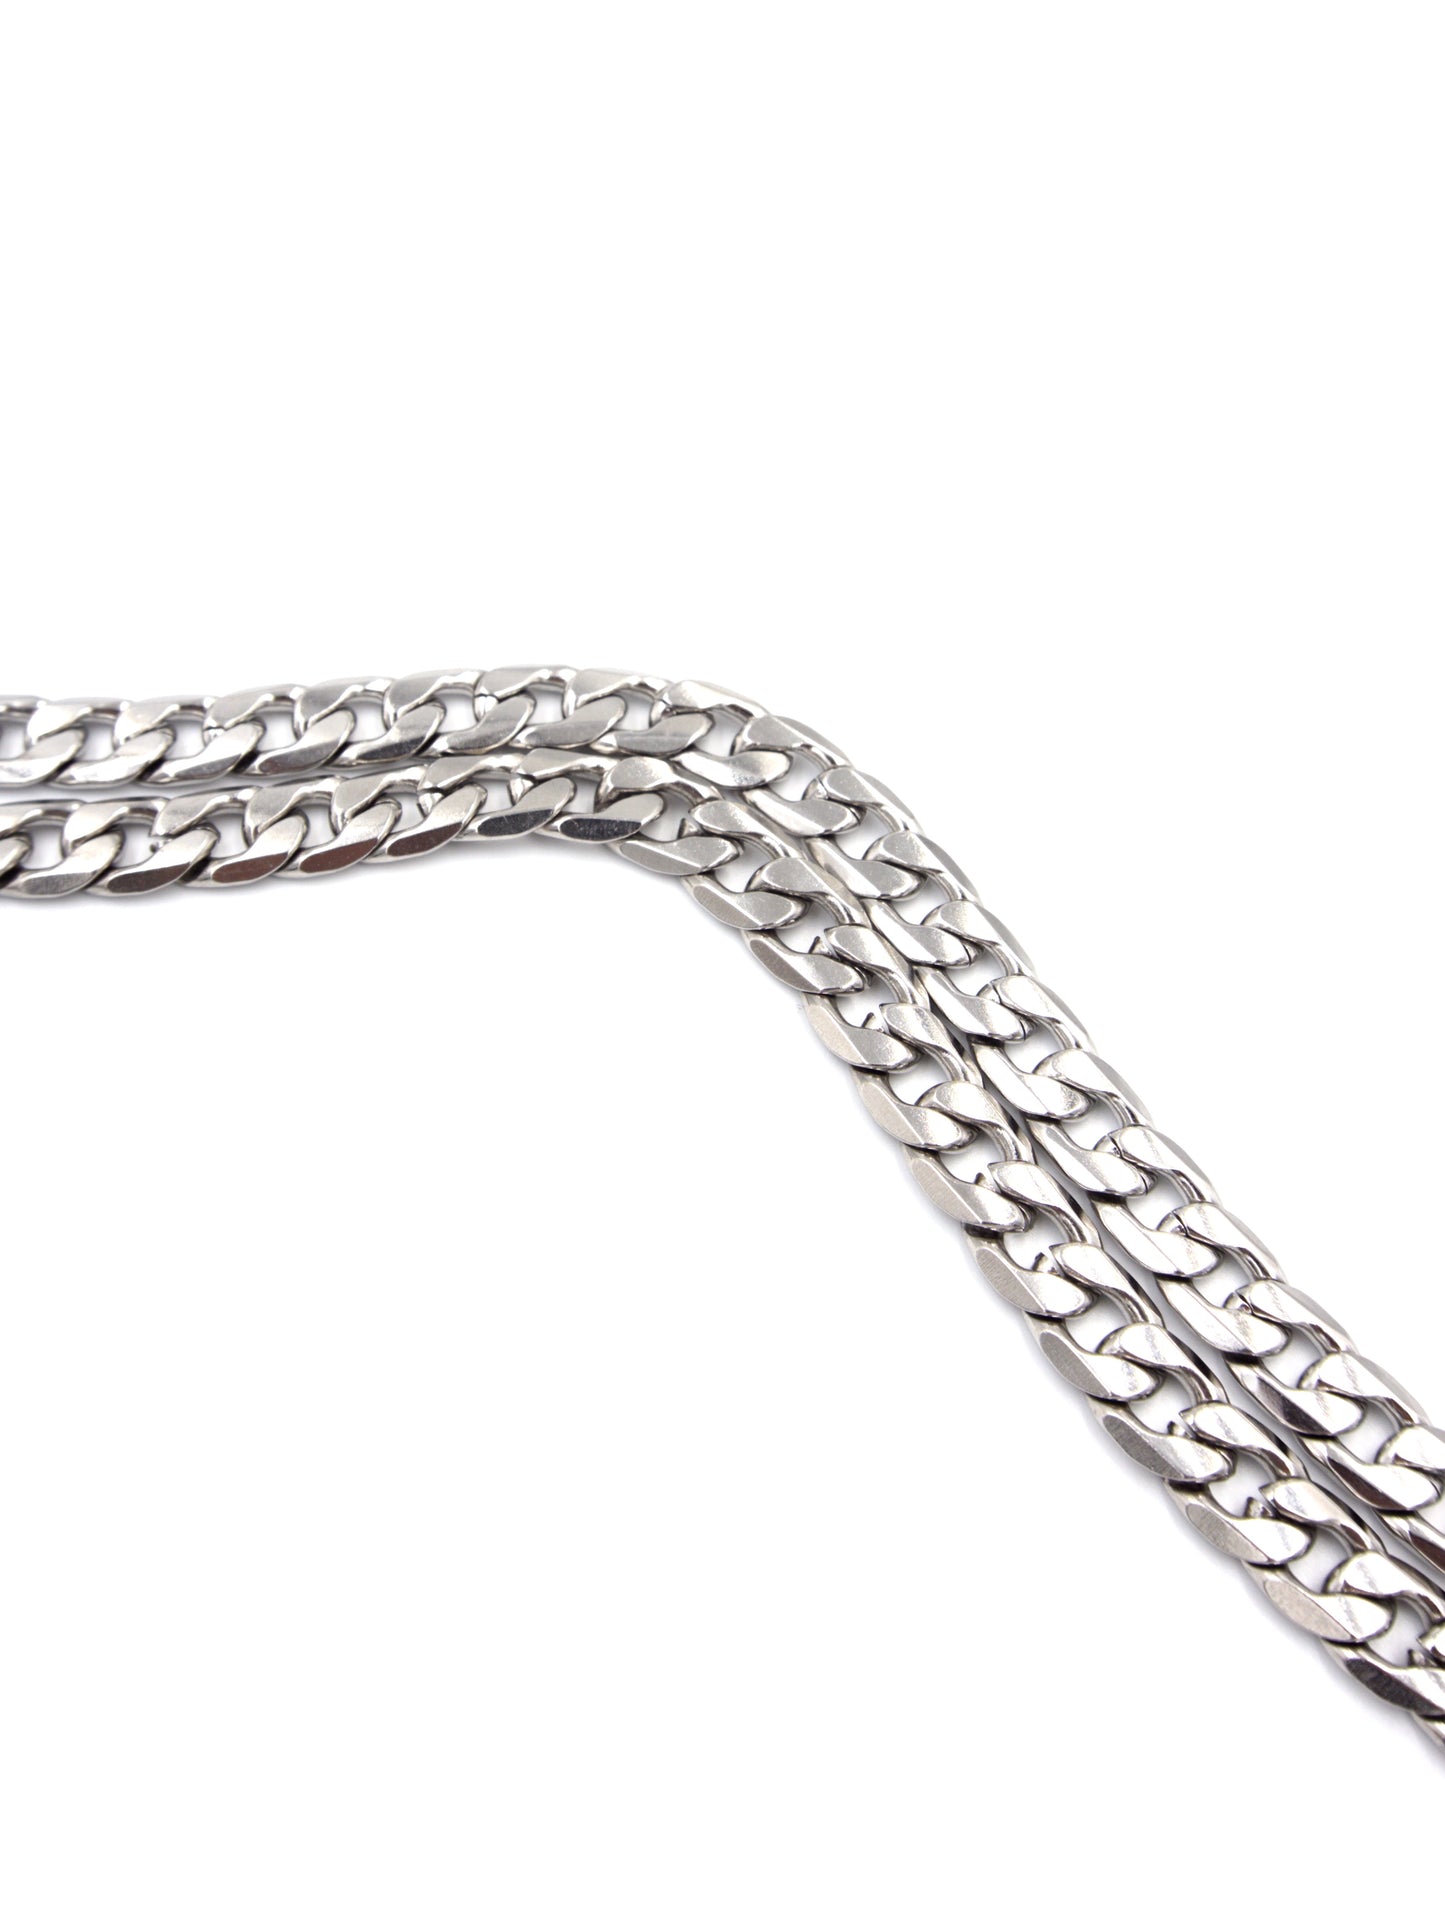 Basic 10mm Cuban Chain Necklace